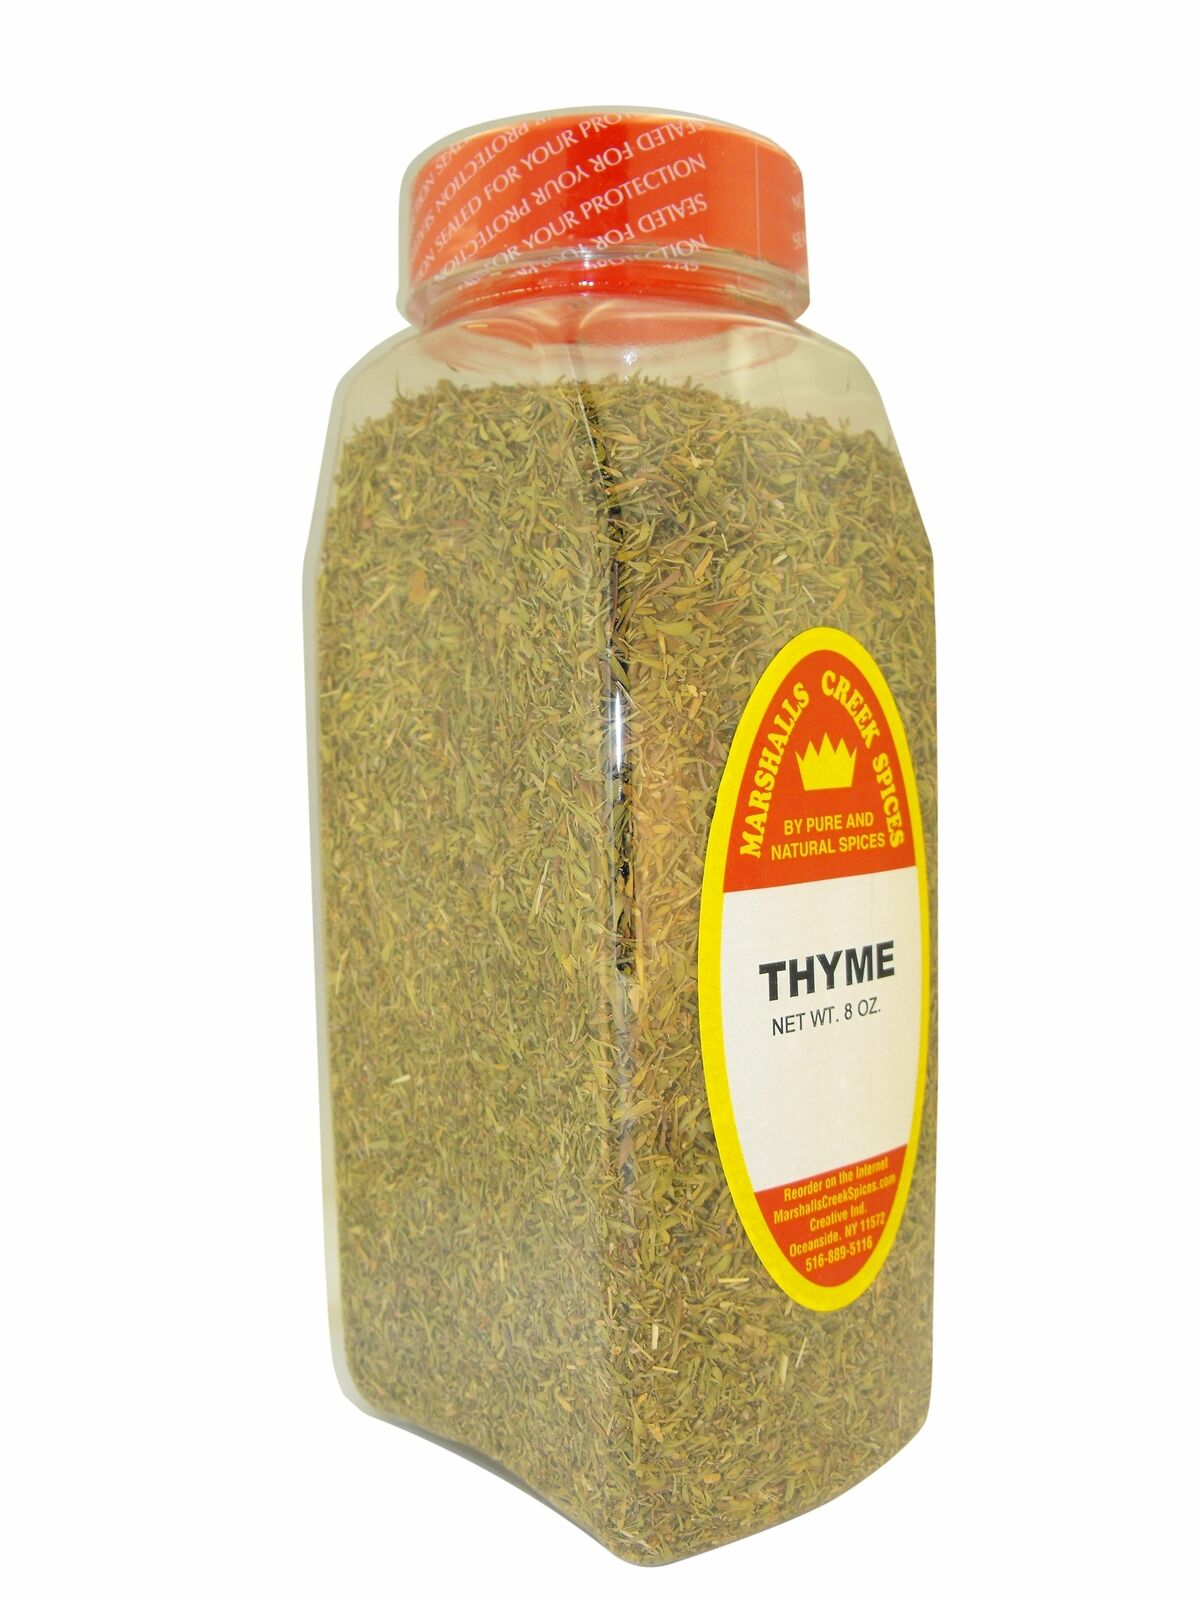 Marshalls Creek Spices XL Thyme, 8 oz (st31)